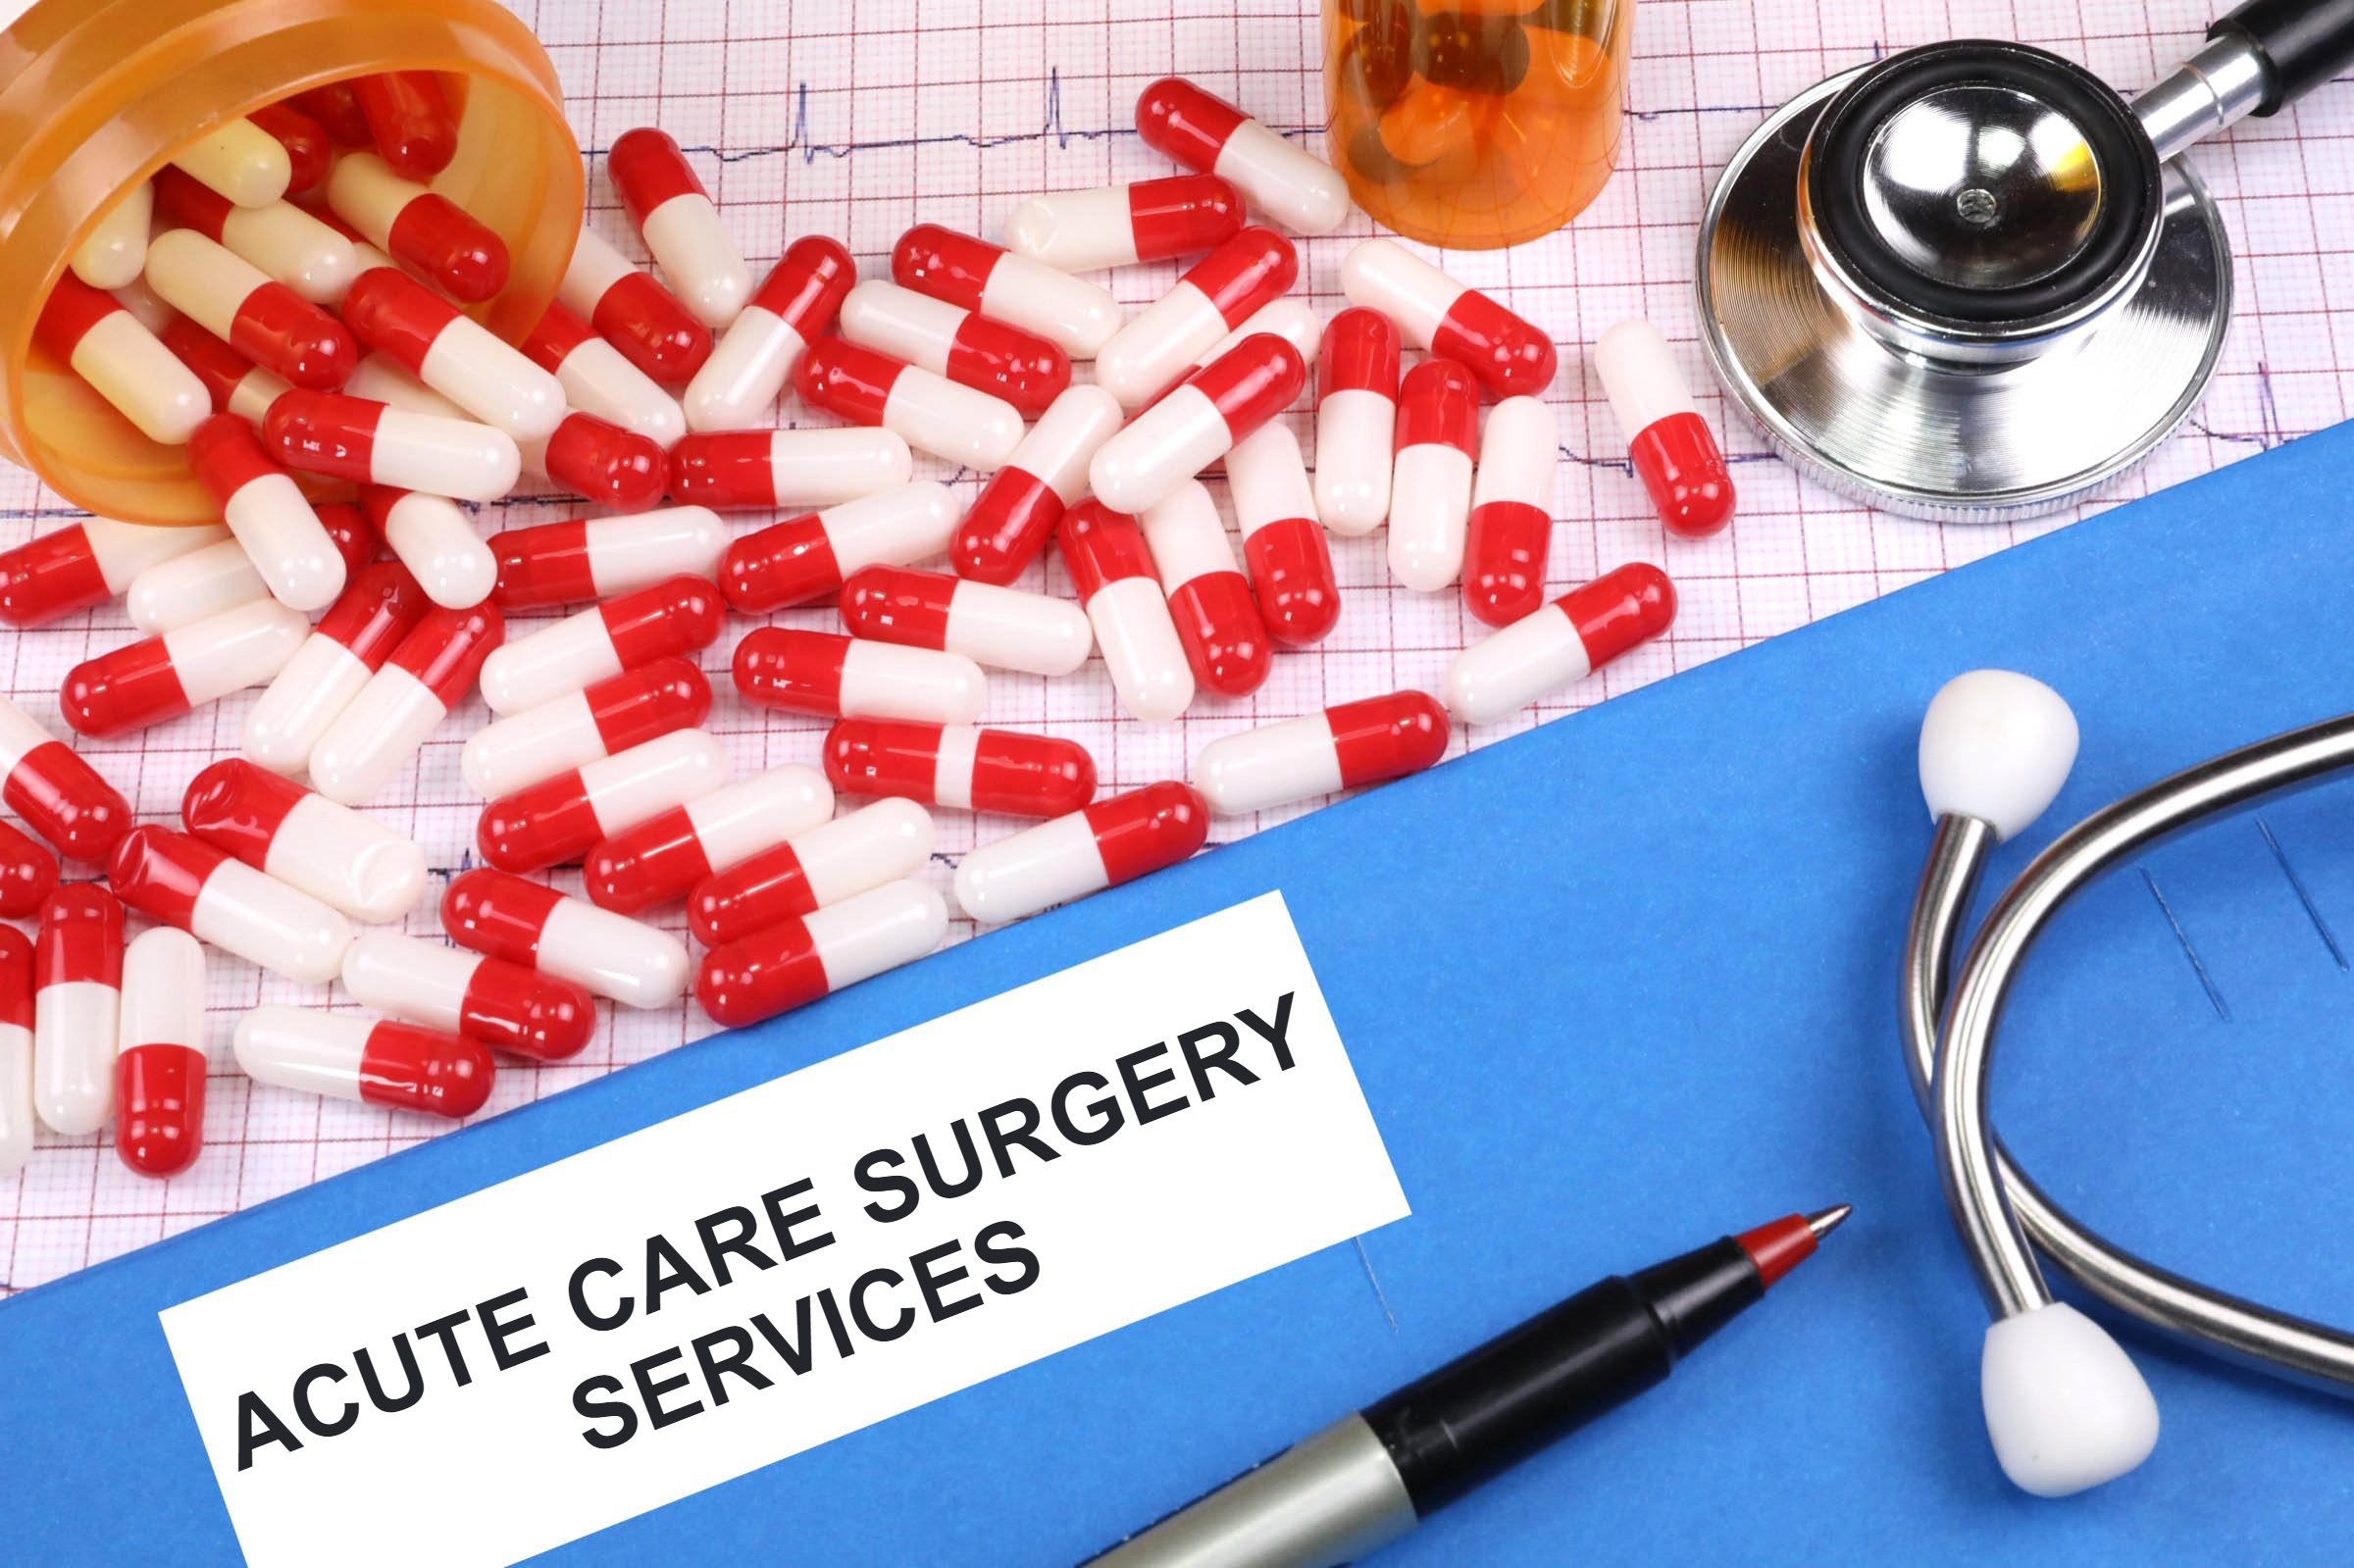 acute care surgery services